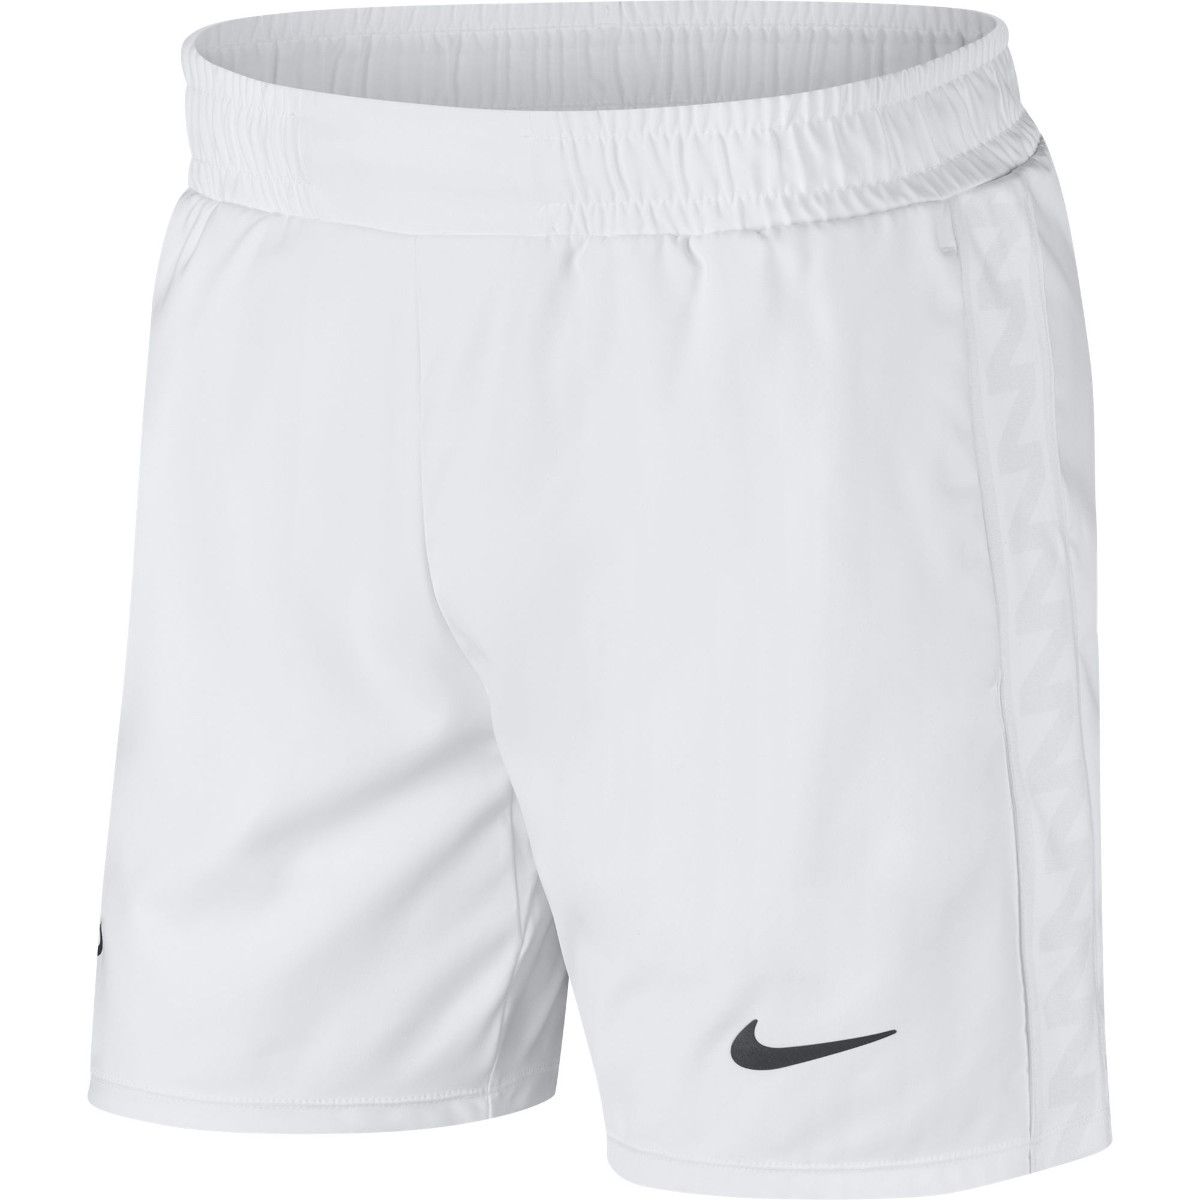 NikeCourt Dri-FIT Rafa 7-inch Men's Tennis Shorts AT4315-101